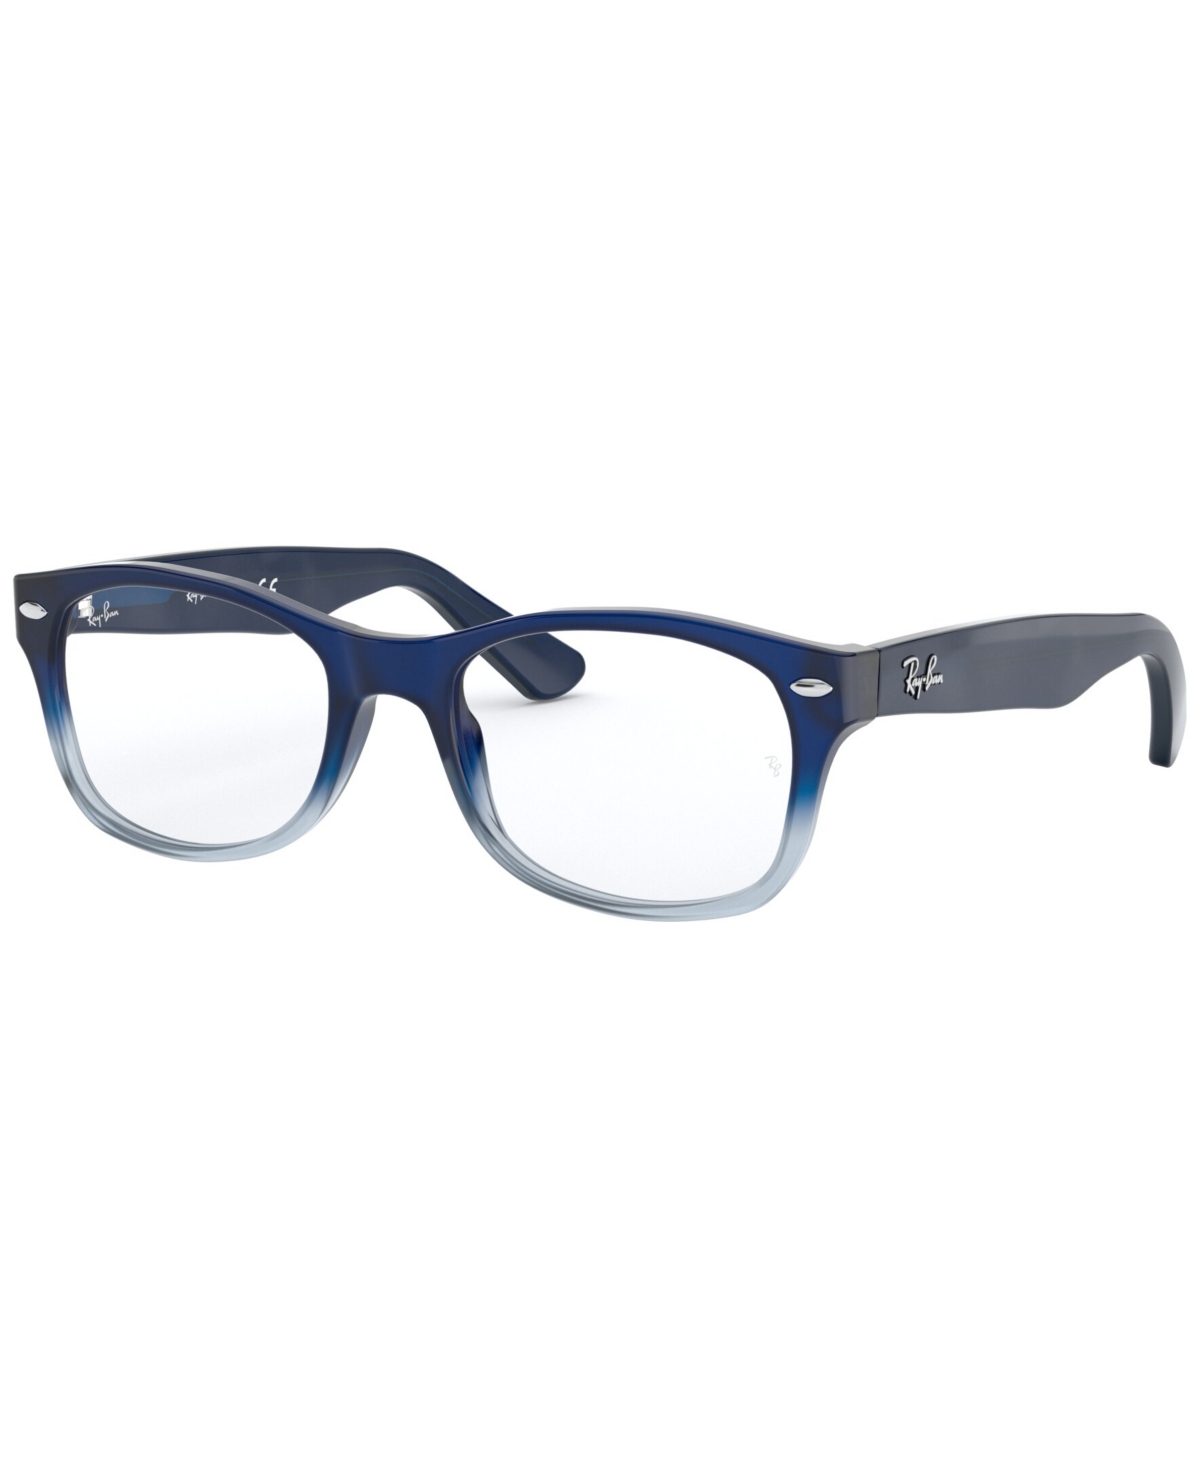 RY1528 Child Square Eyeglasses - Blue